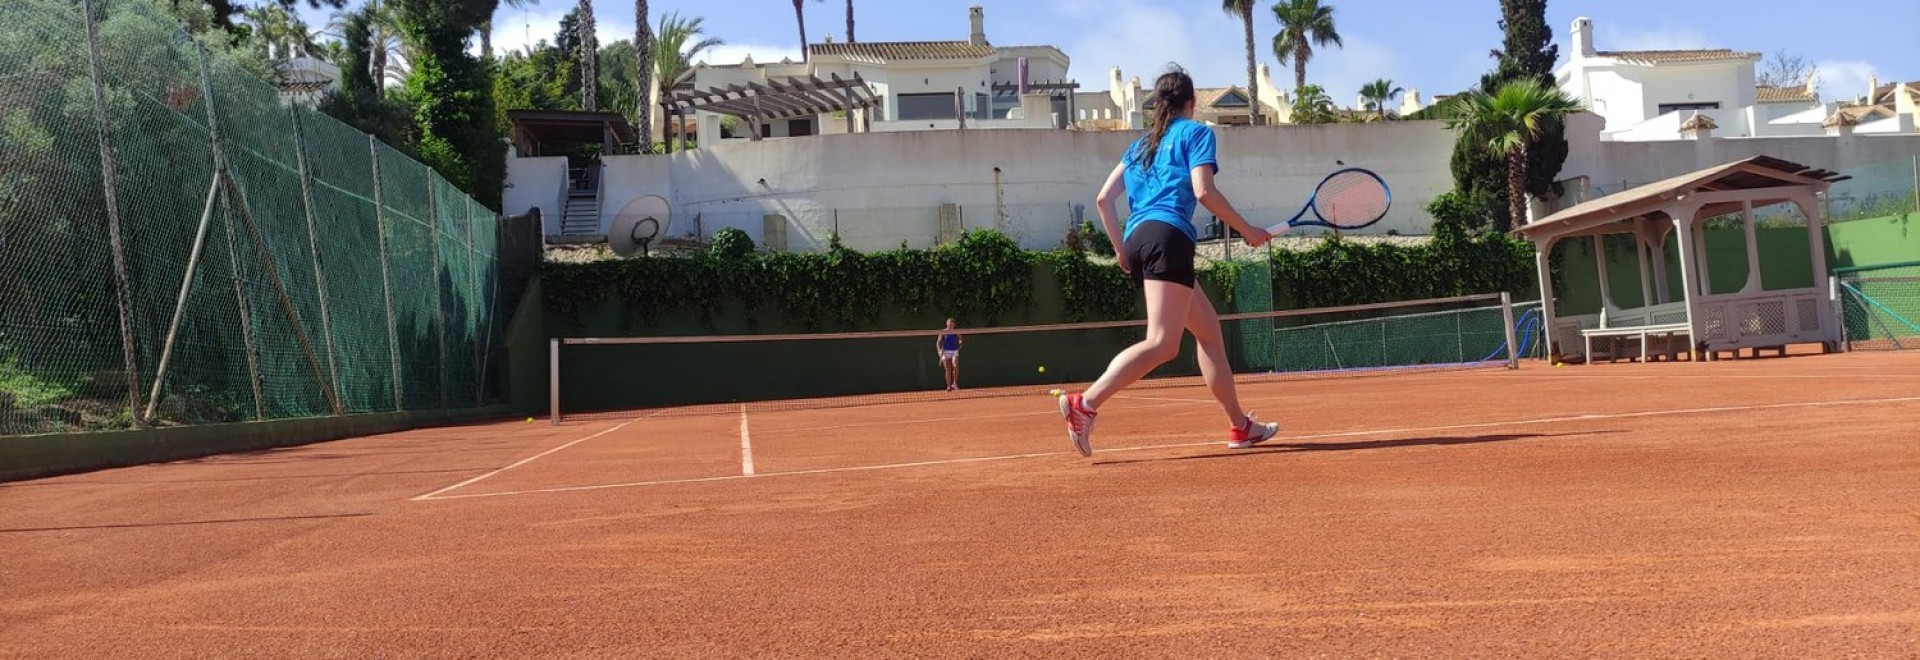 5-Day Junior Tennis Academy - The Racquets Club at La Manga, Spain